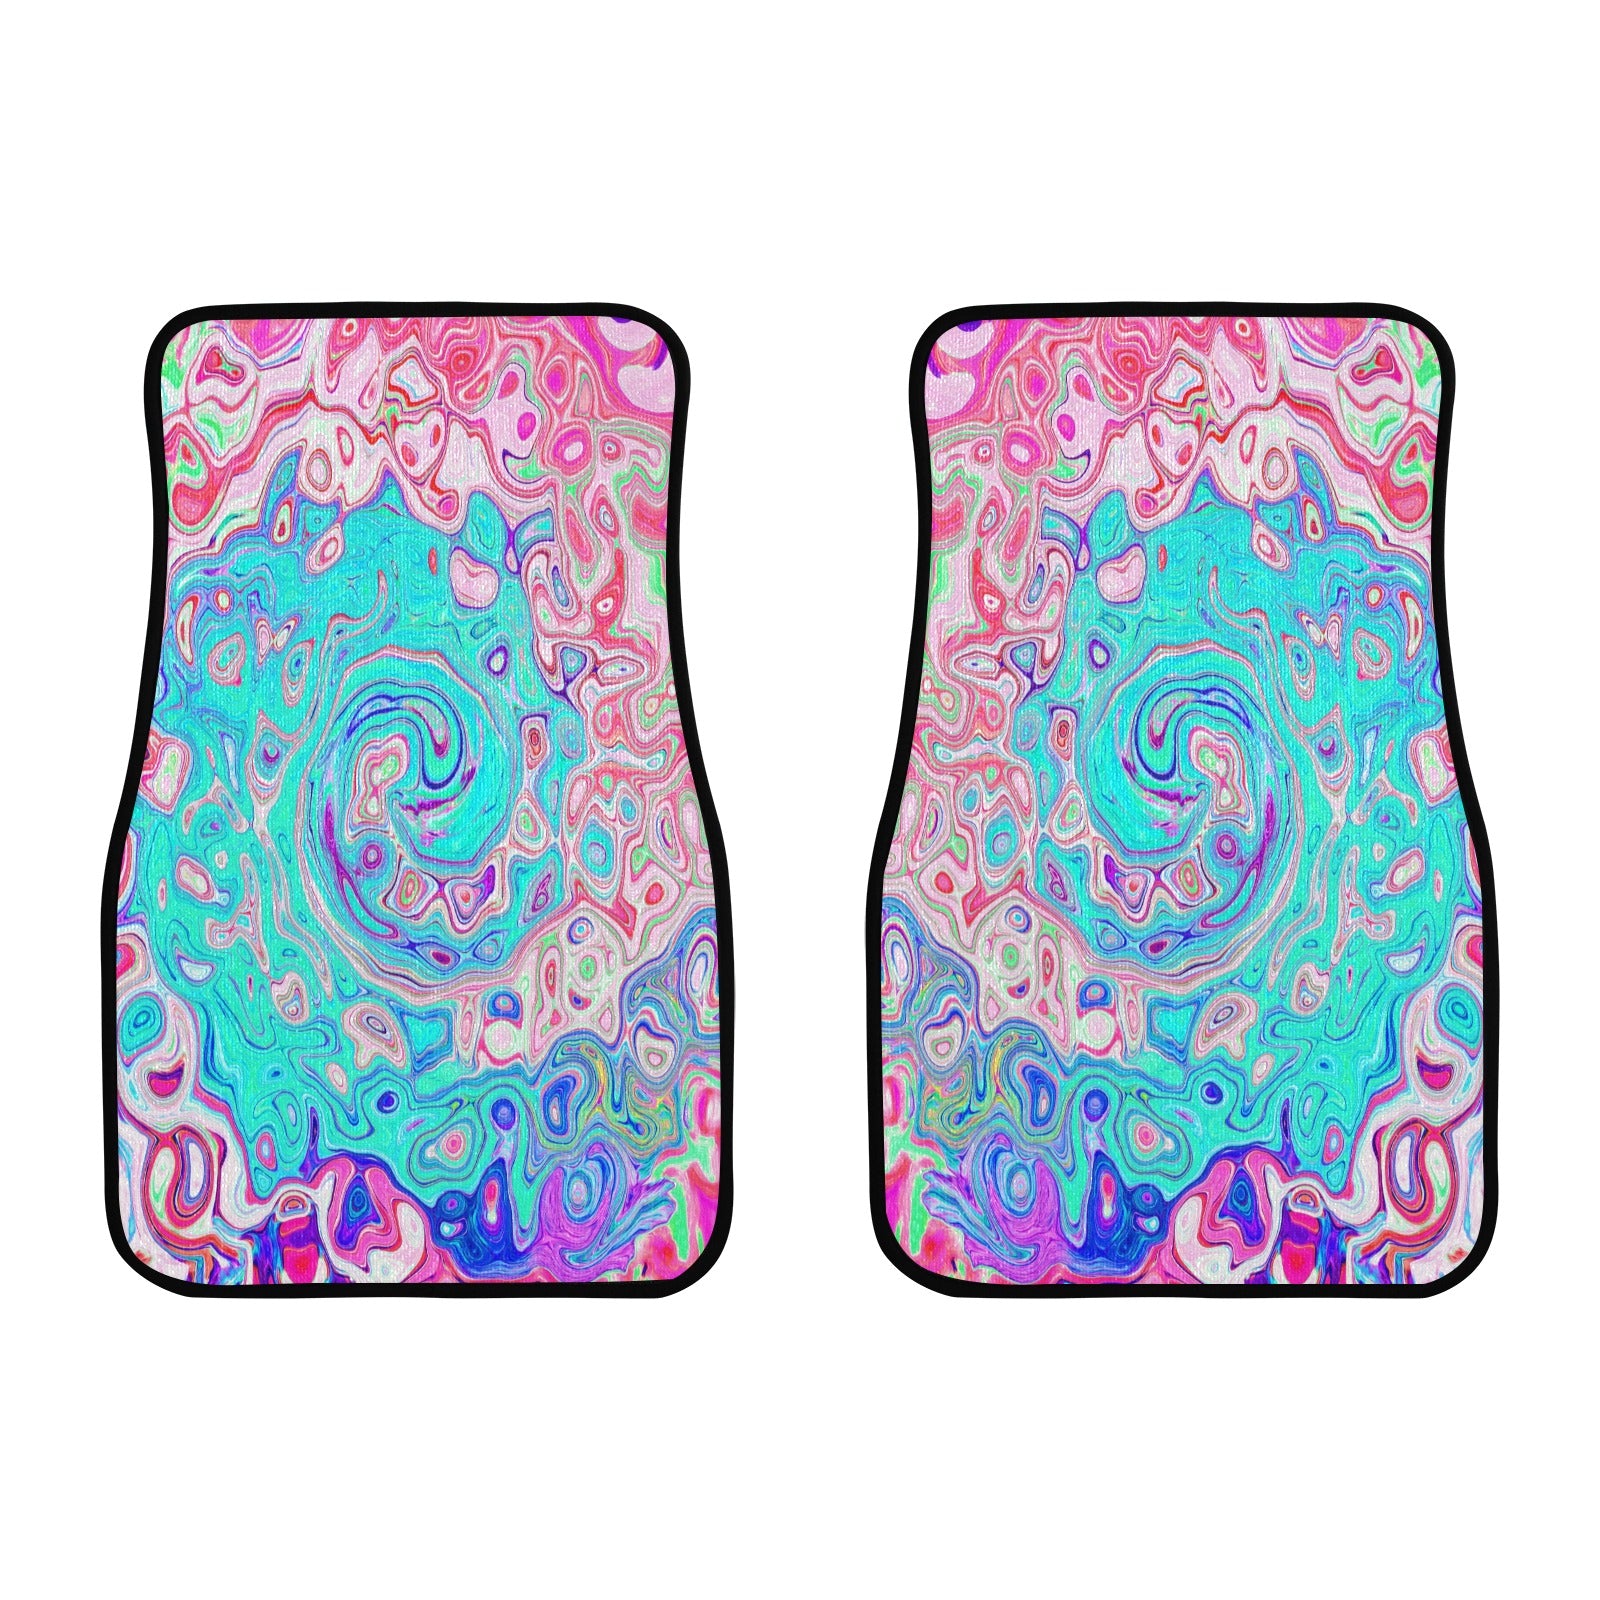 Car Floor Mats, Groovy Aqua Blue and Pink Abstract Retro Swirl